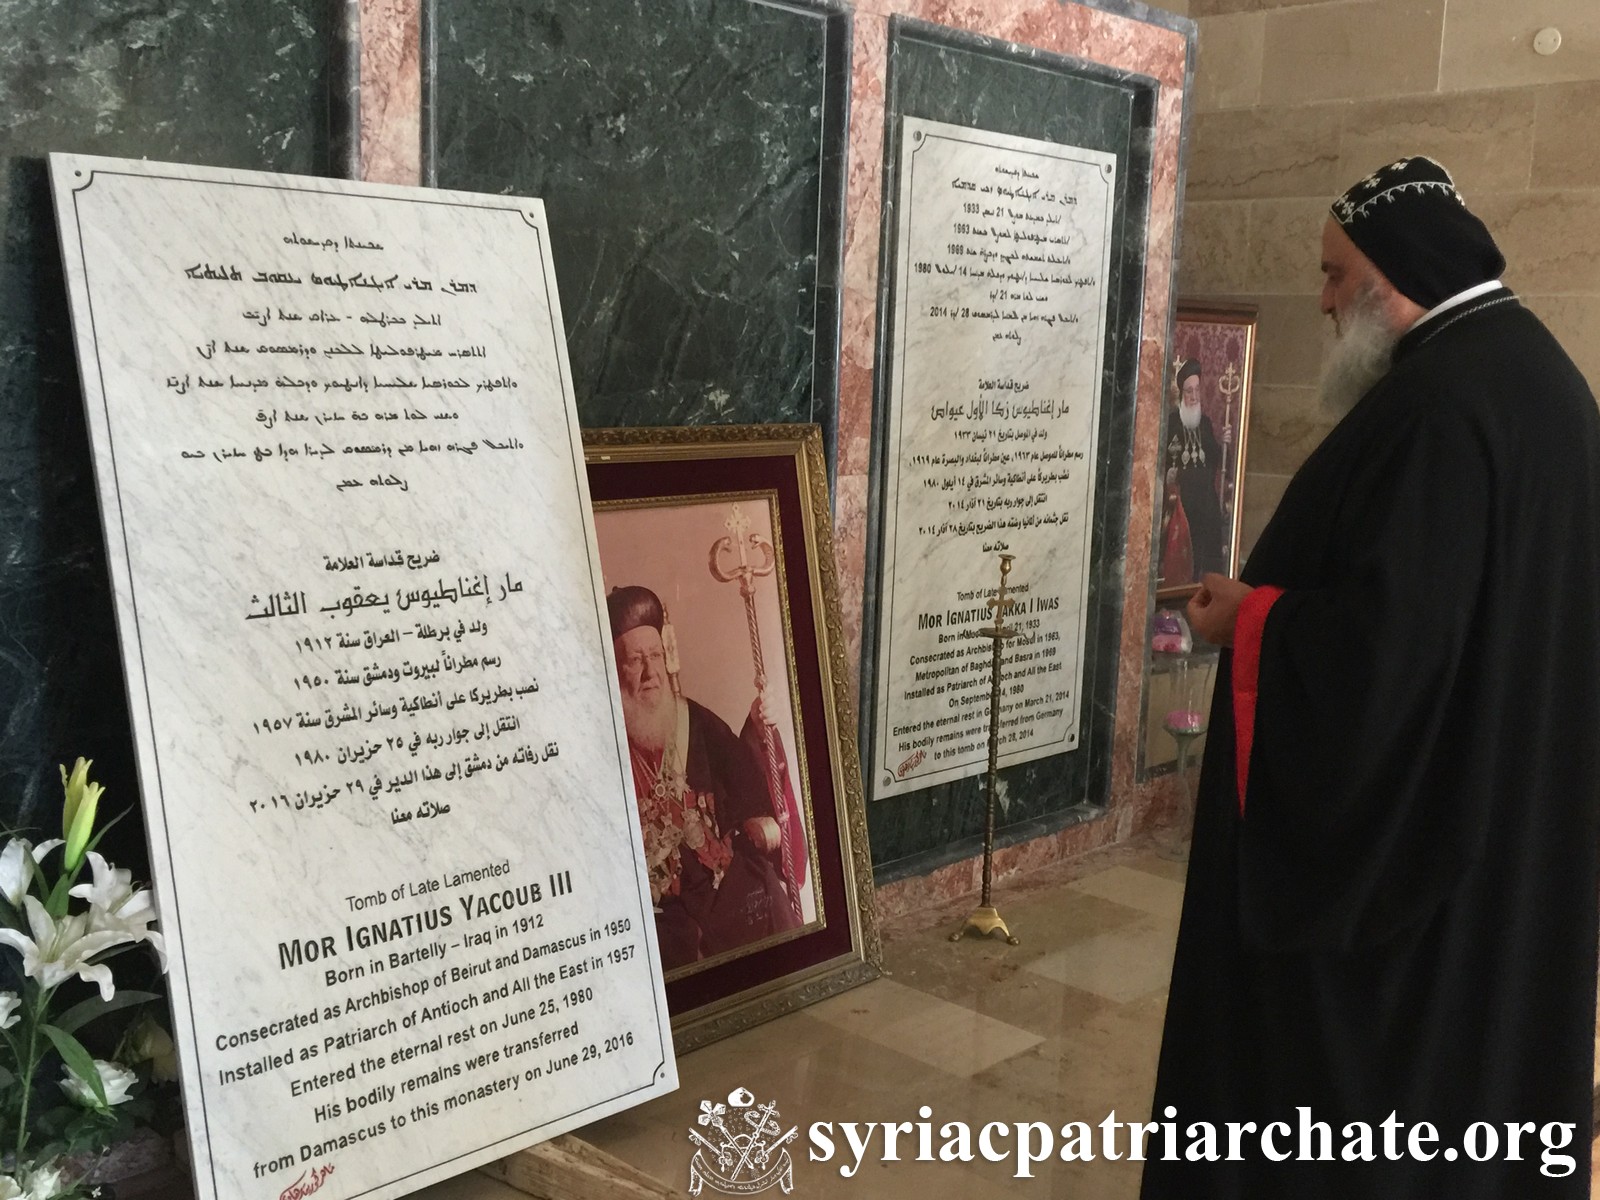 Memorial Service for Patriarch Mor Ignatius Yacoub III